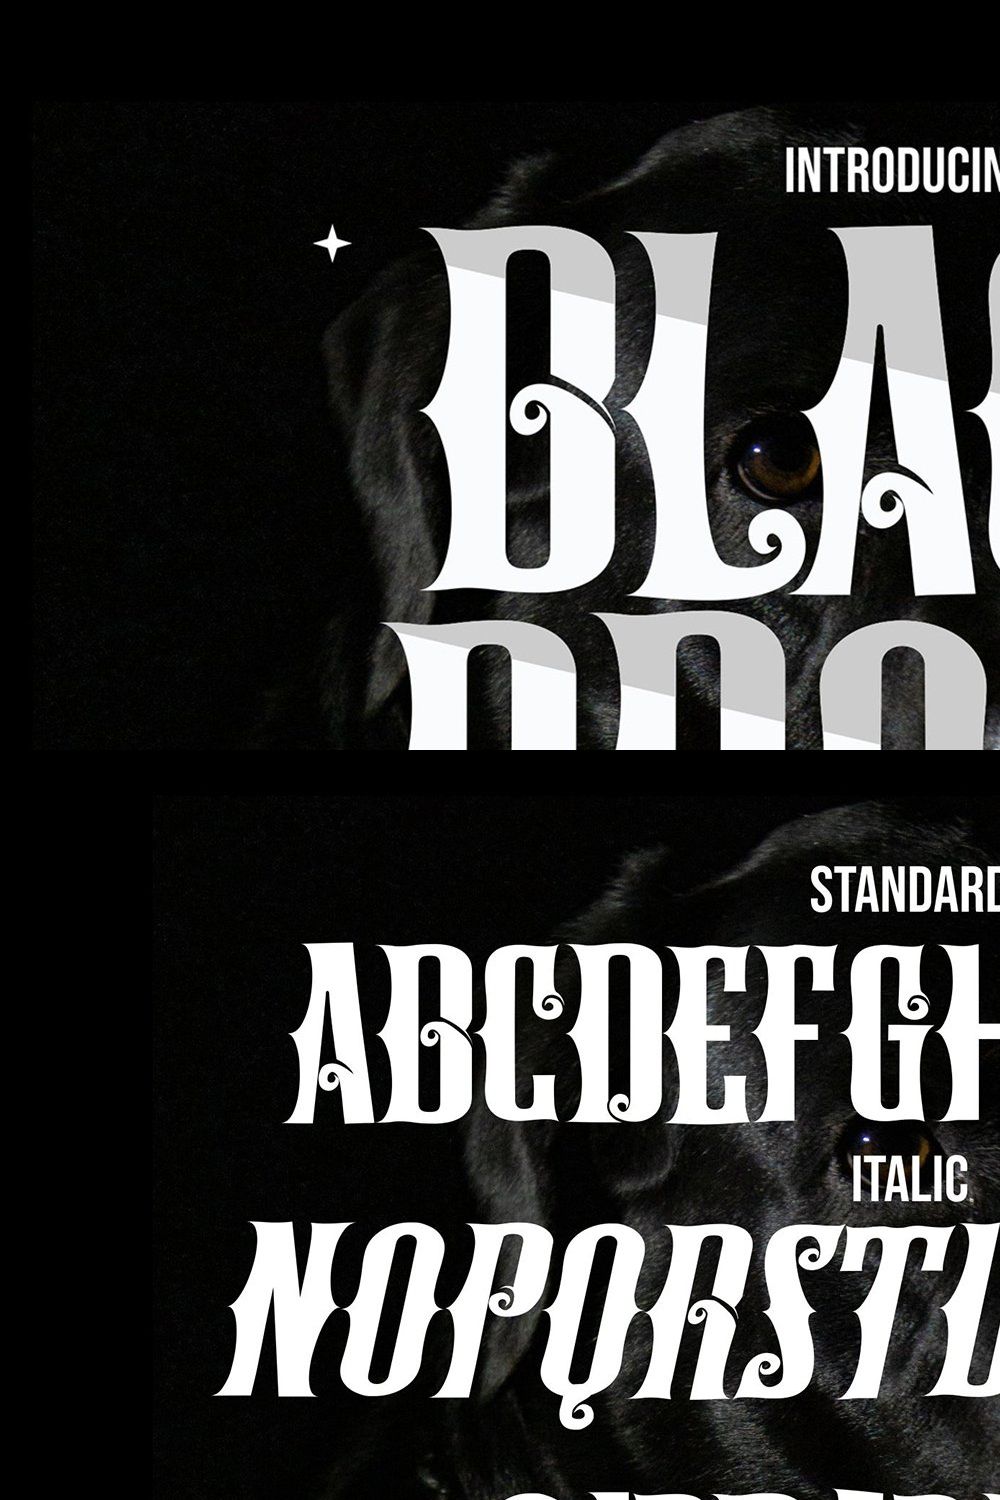 Black Brody - Aesthetic Blackletter pinterest preview image.